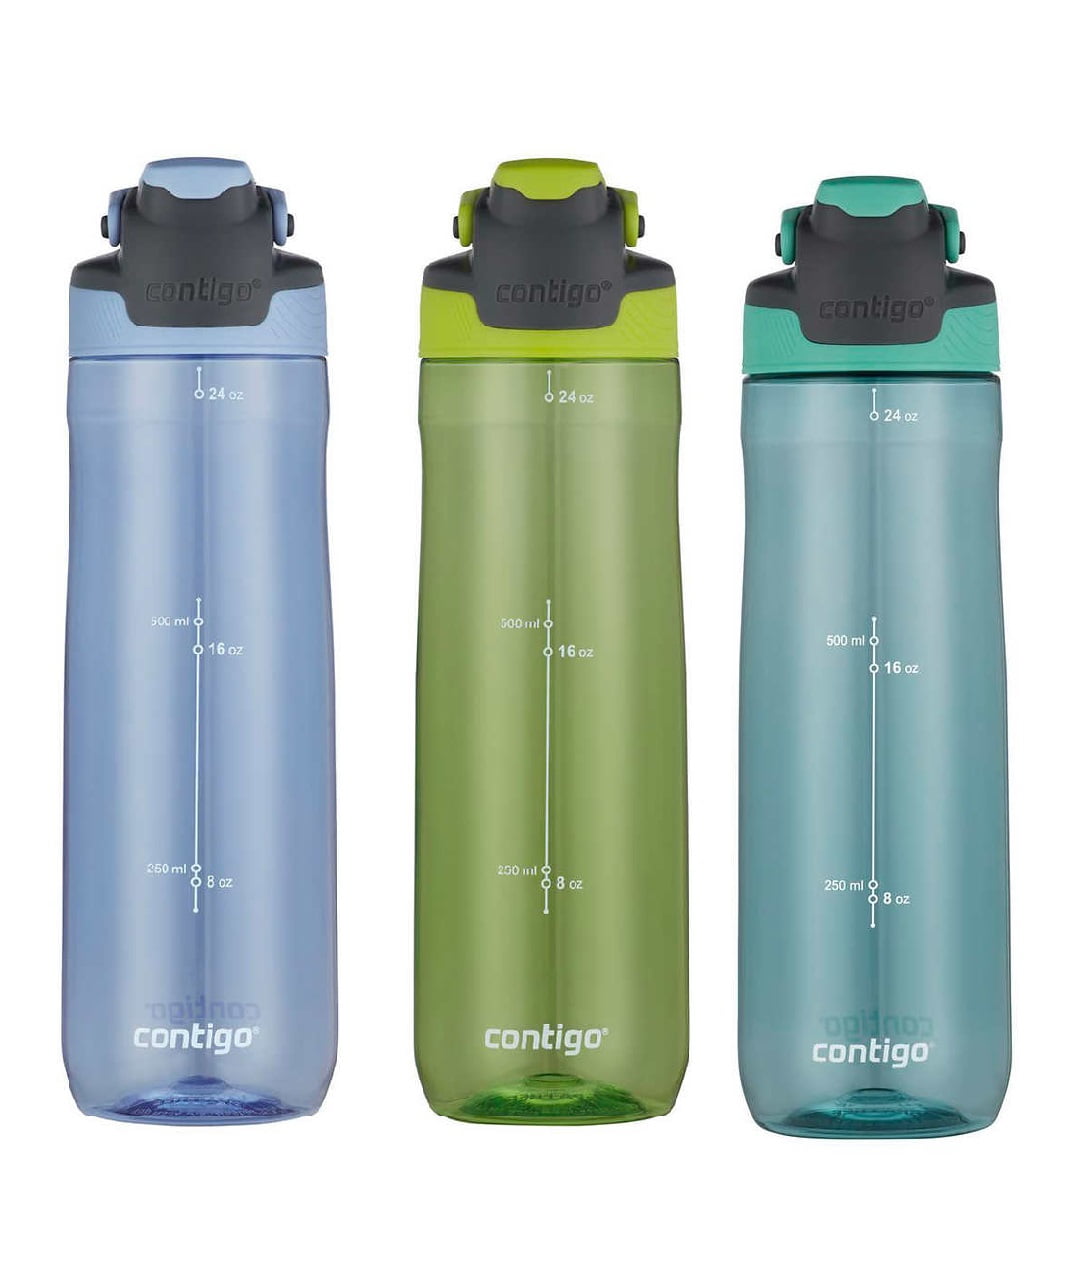 Contigo Autoseal Spill-Proof Water Bottle 24oz 3 Pack 